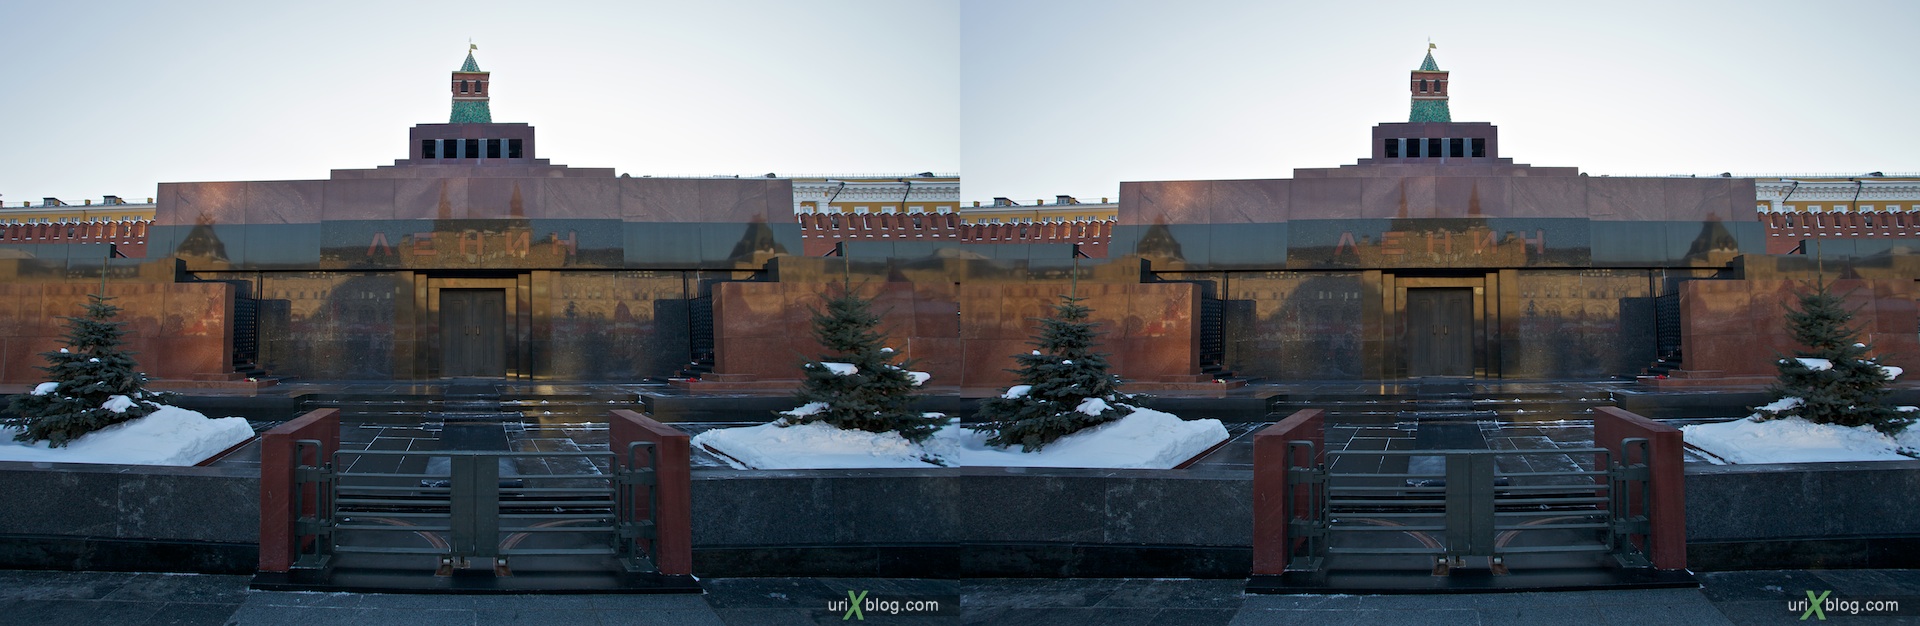 2010 3D, stereo, cross-eyed, стерео, стереопара Moscow, Москва, Красная площадь, Reg square